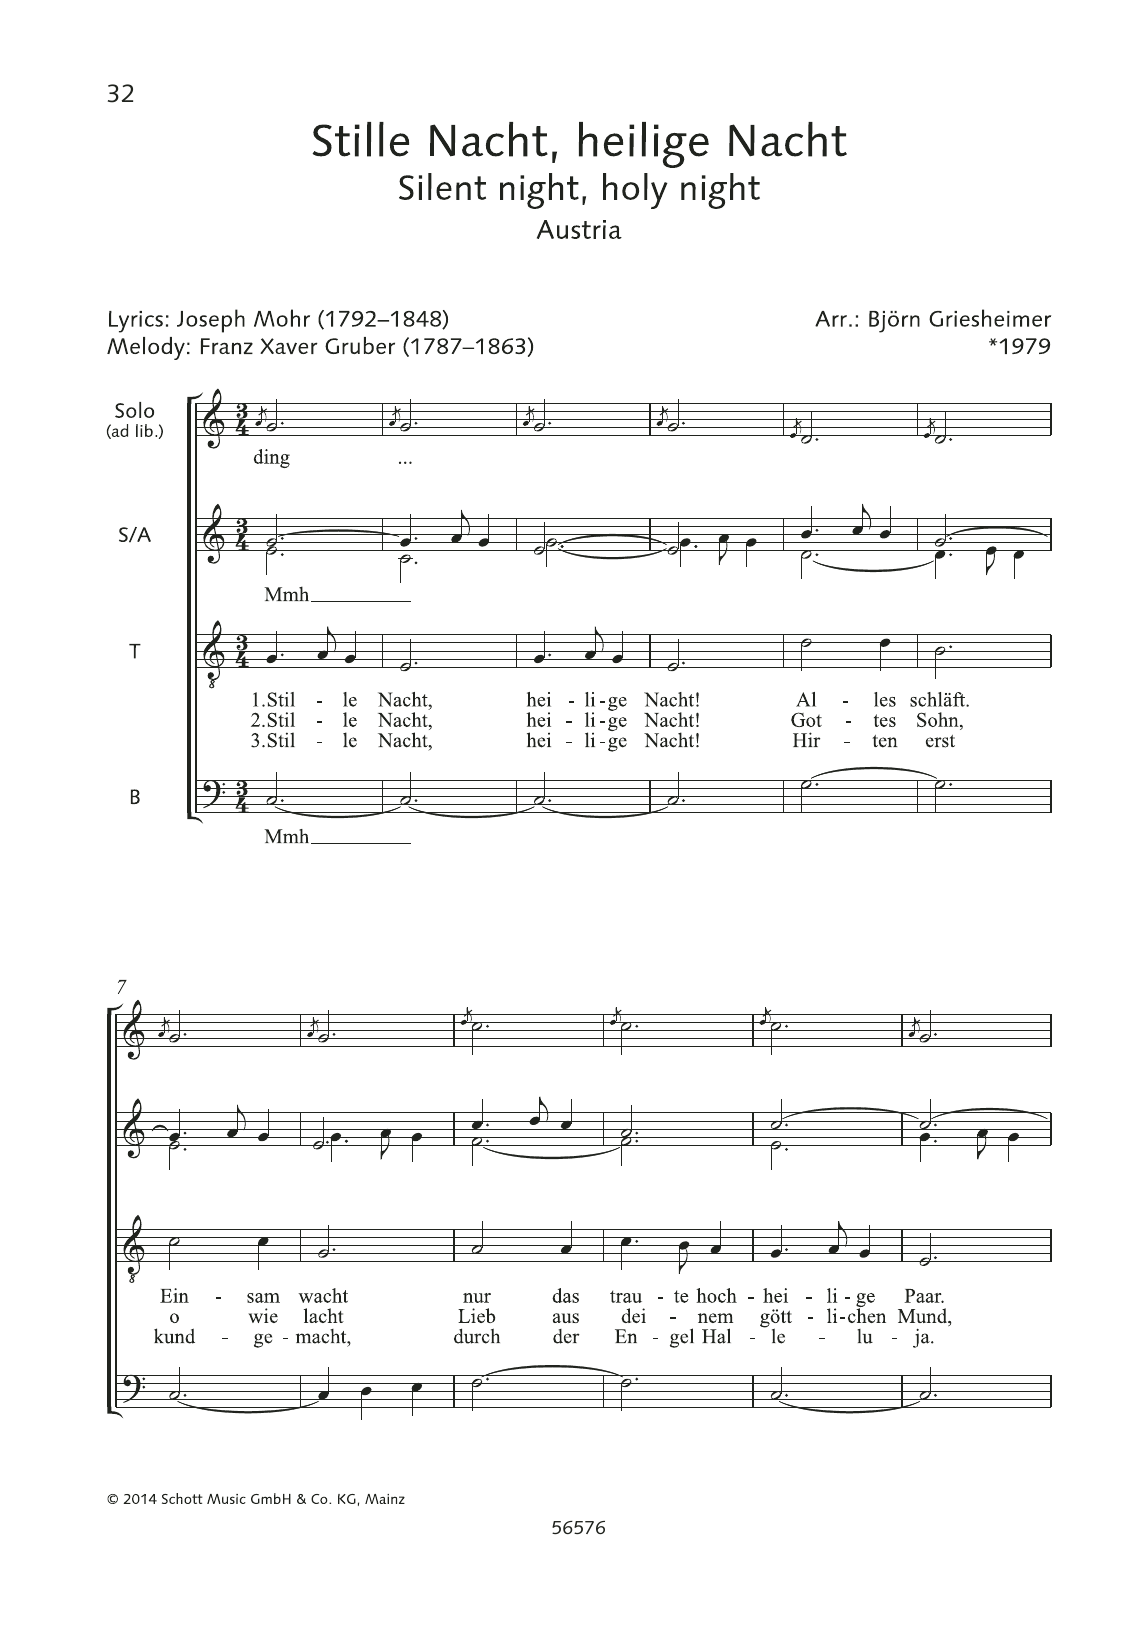 Franz Xaver Gruber Stille Nacht, Heilige Nacht Sheet Music Notes & Chords for Choral - Download or Print PDF